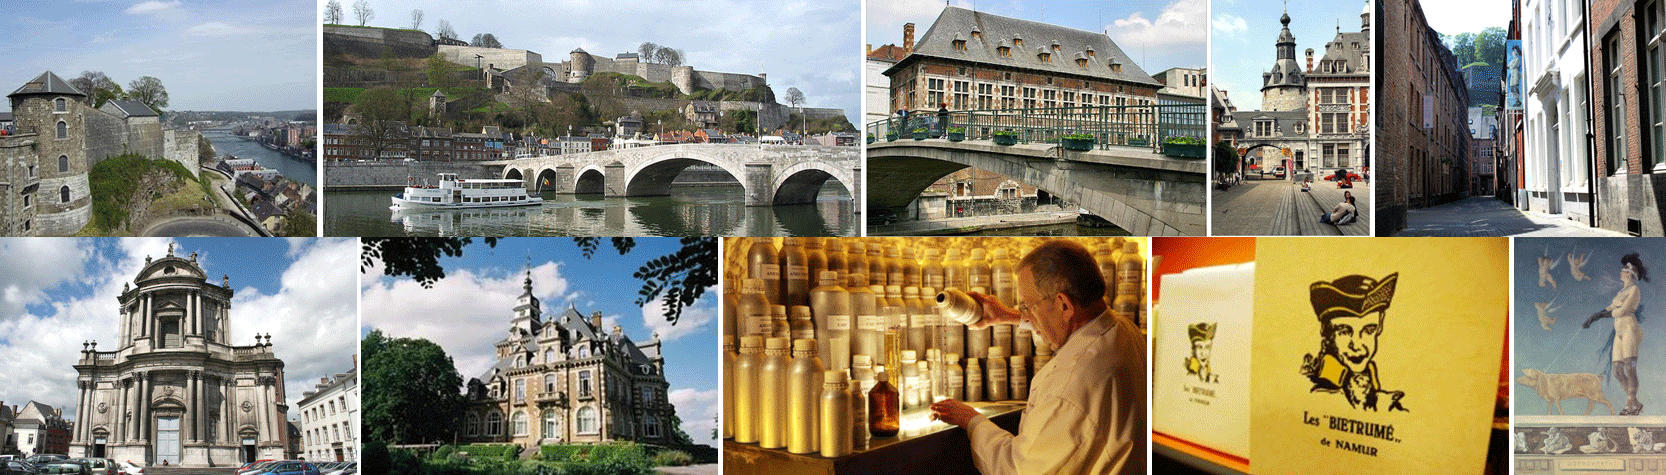 Impressions of Namur